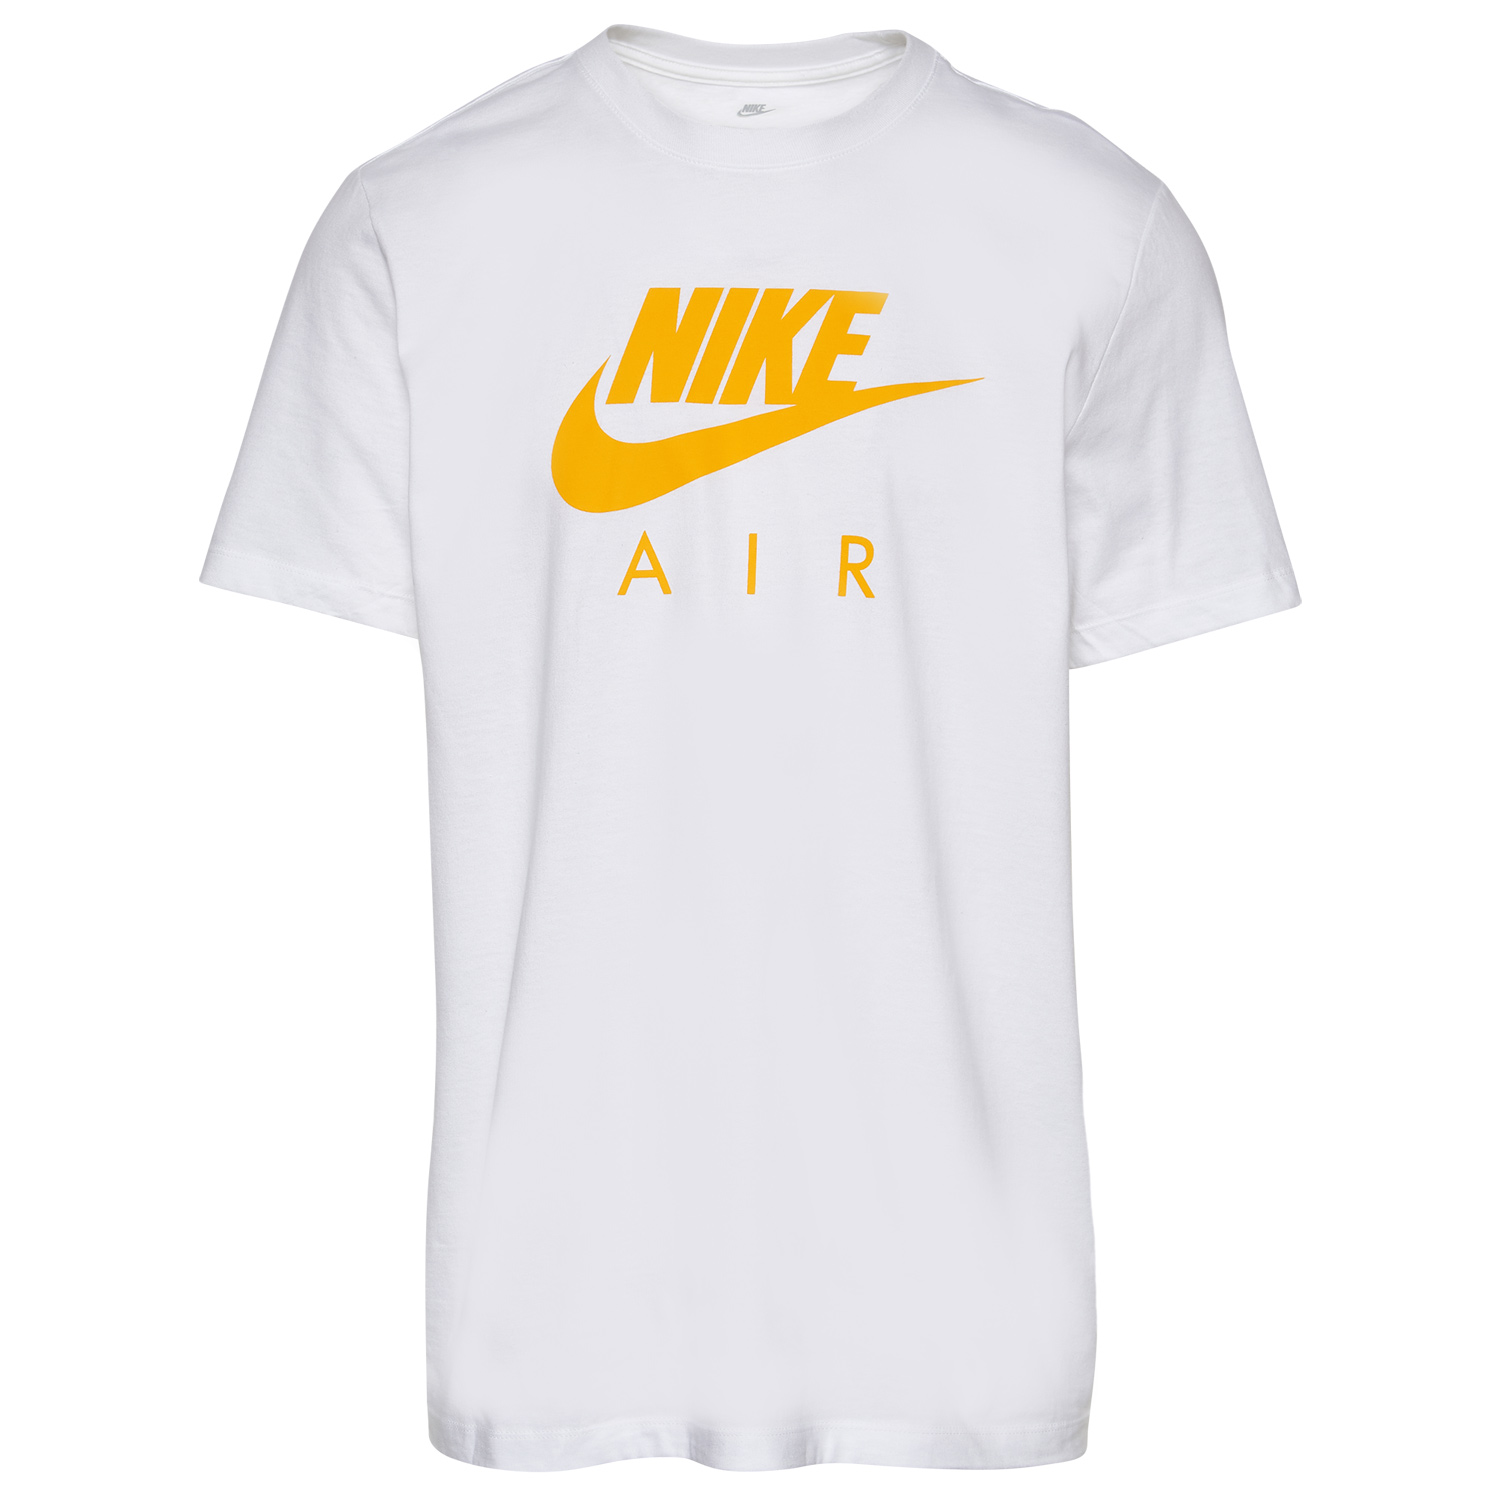 nike-air-shirt-white-yellow